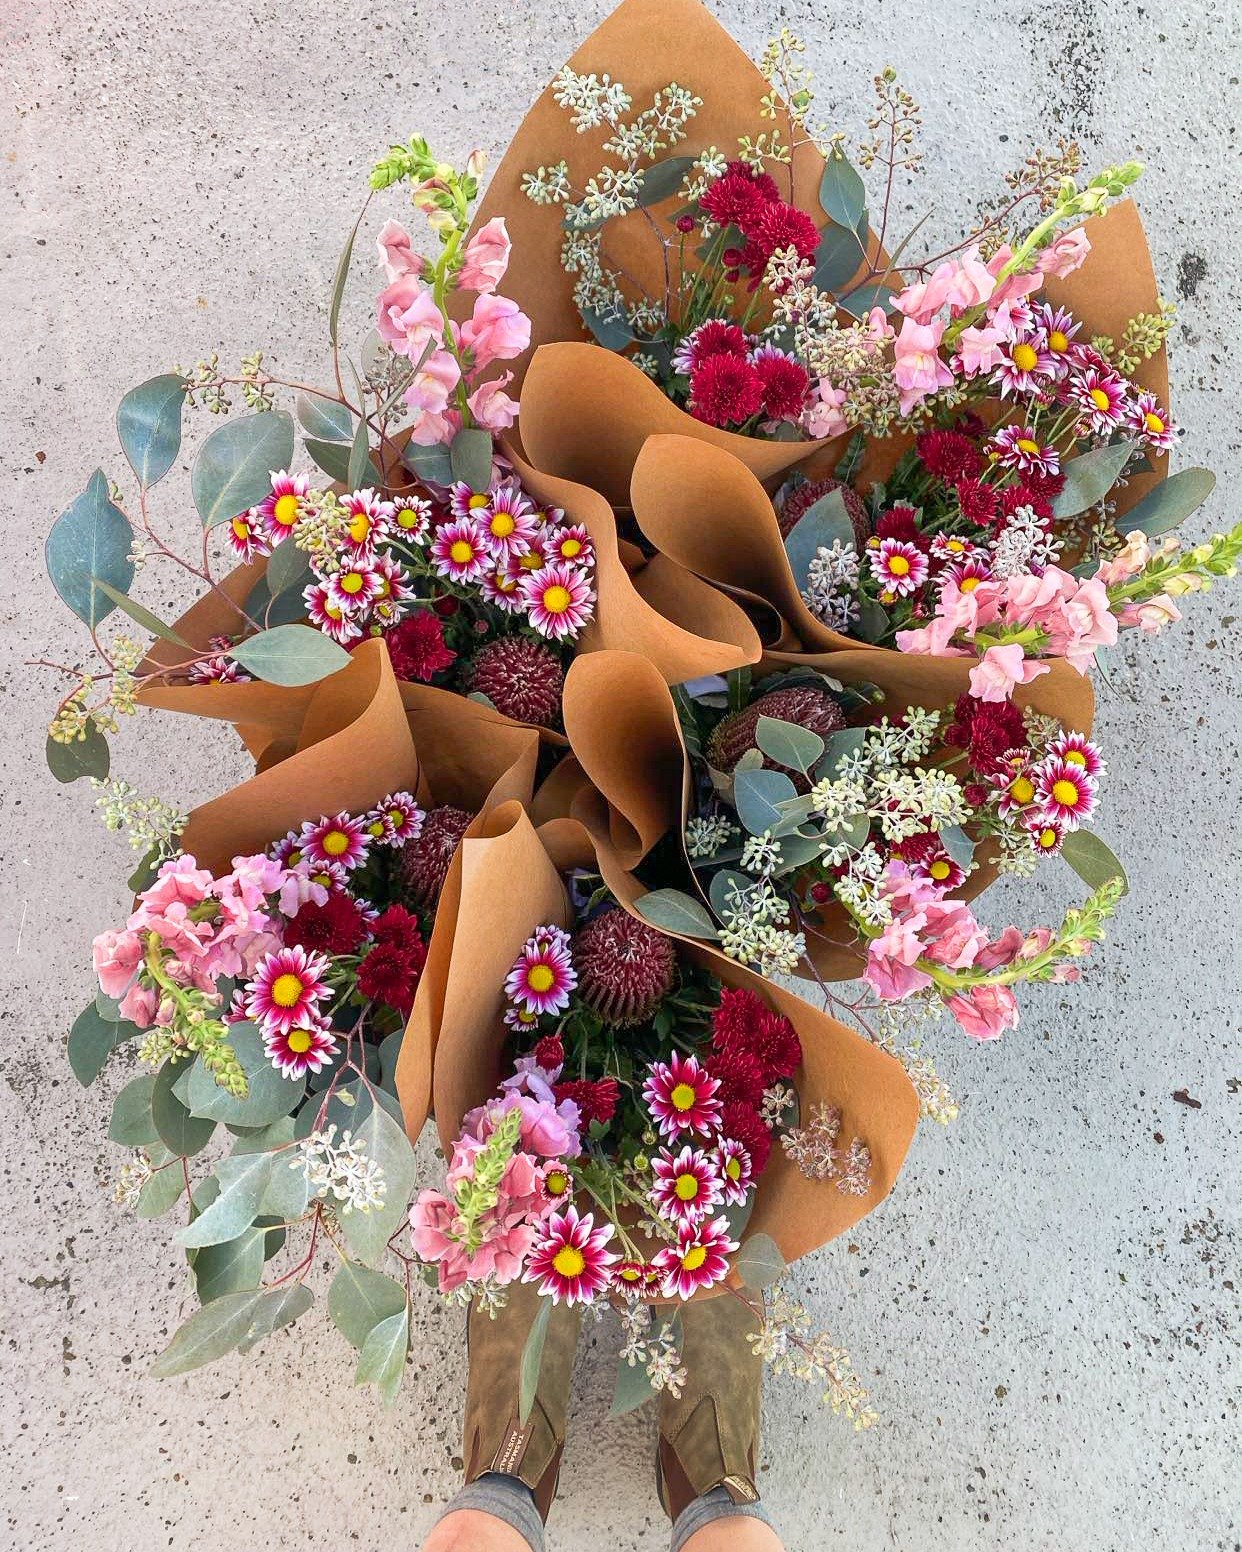 Tag someone who needs to see these Fri-yay fleurs! 😜

#friyayfleurs #newcastleflorist #flowerdeliverynewcastle
#flowerdeliverylakemacquarie #flowerdeliverymaitland